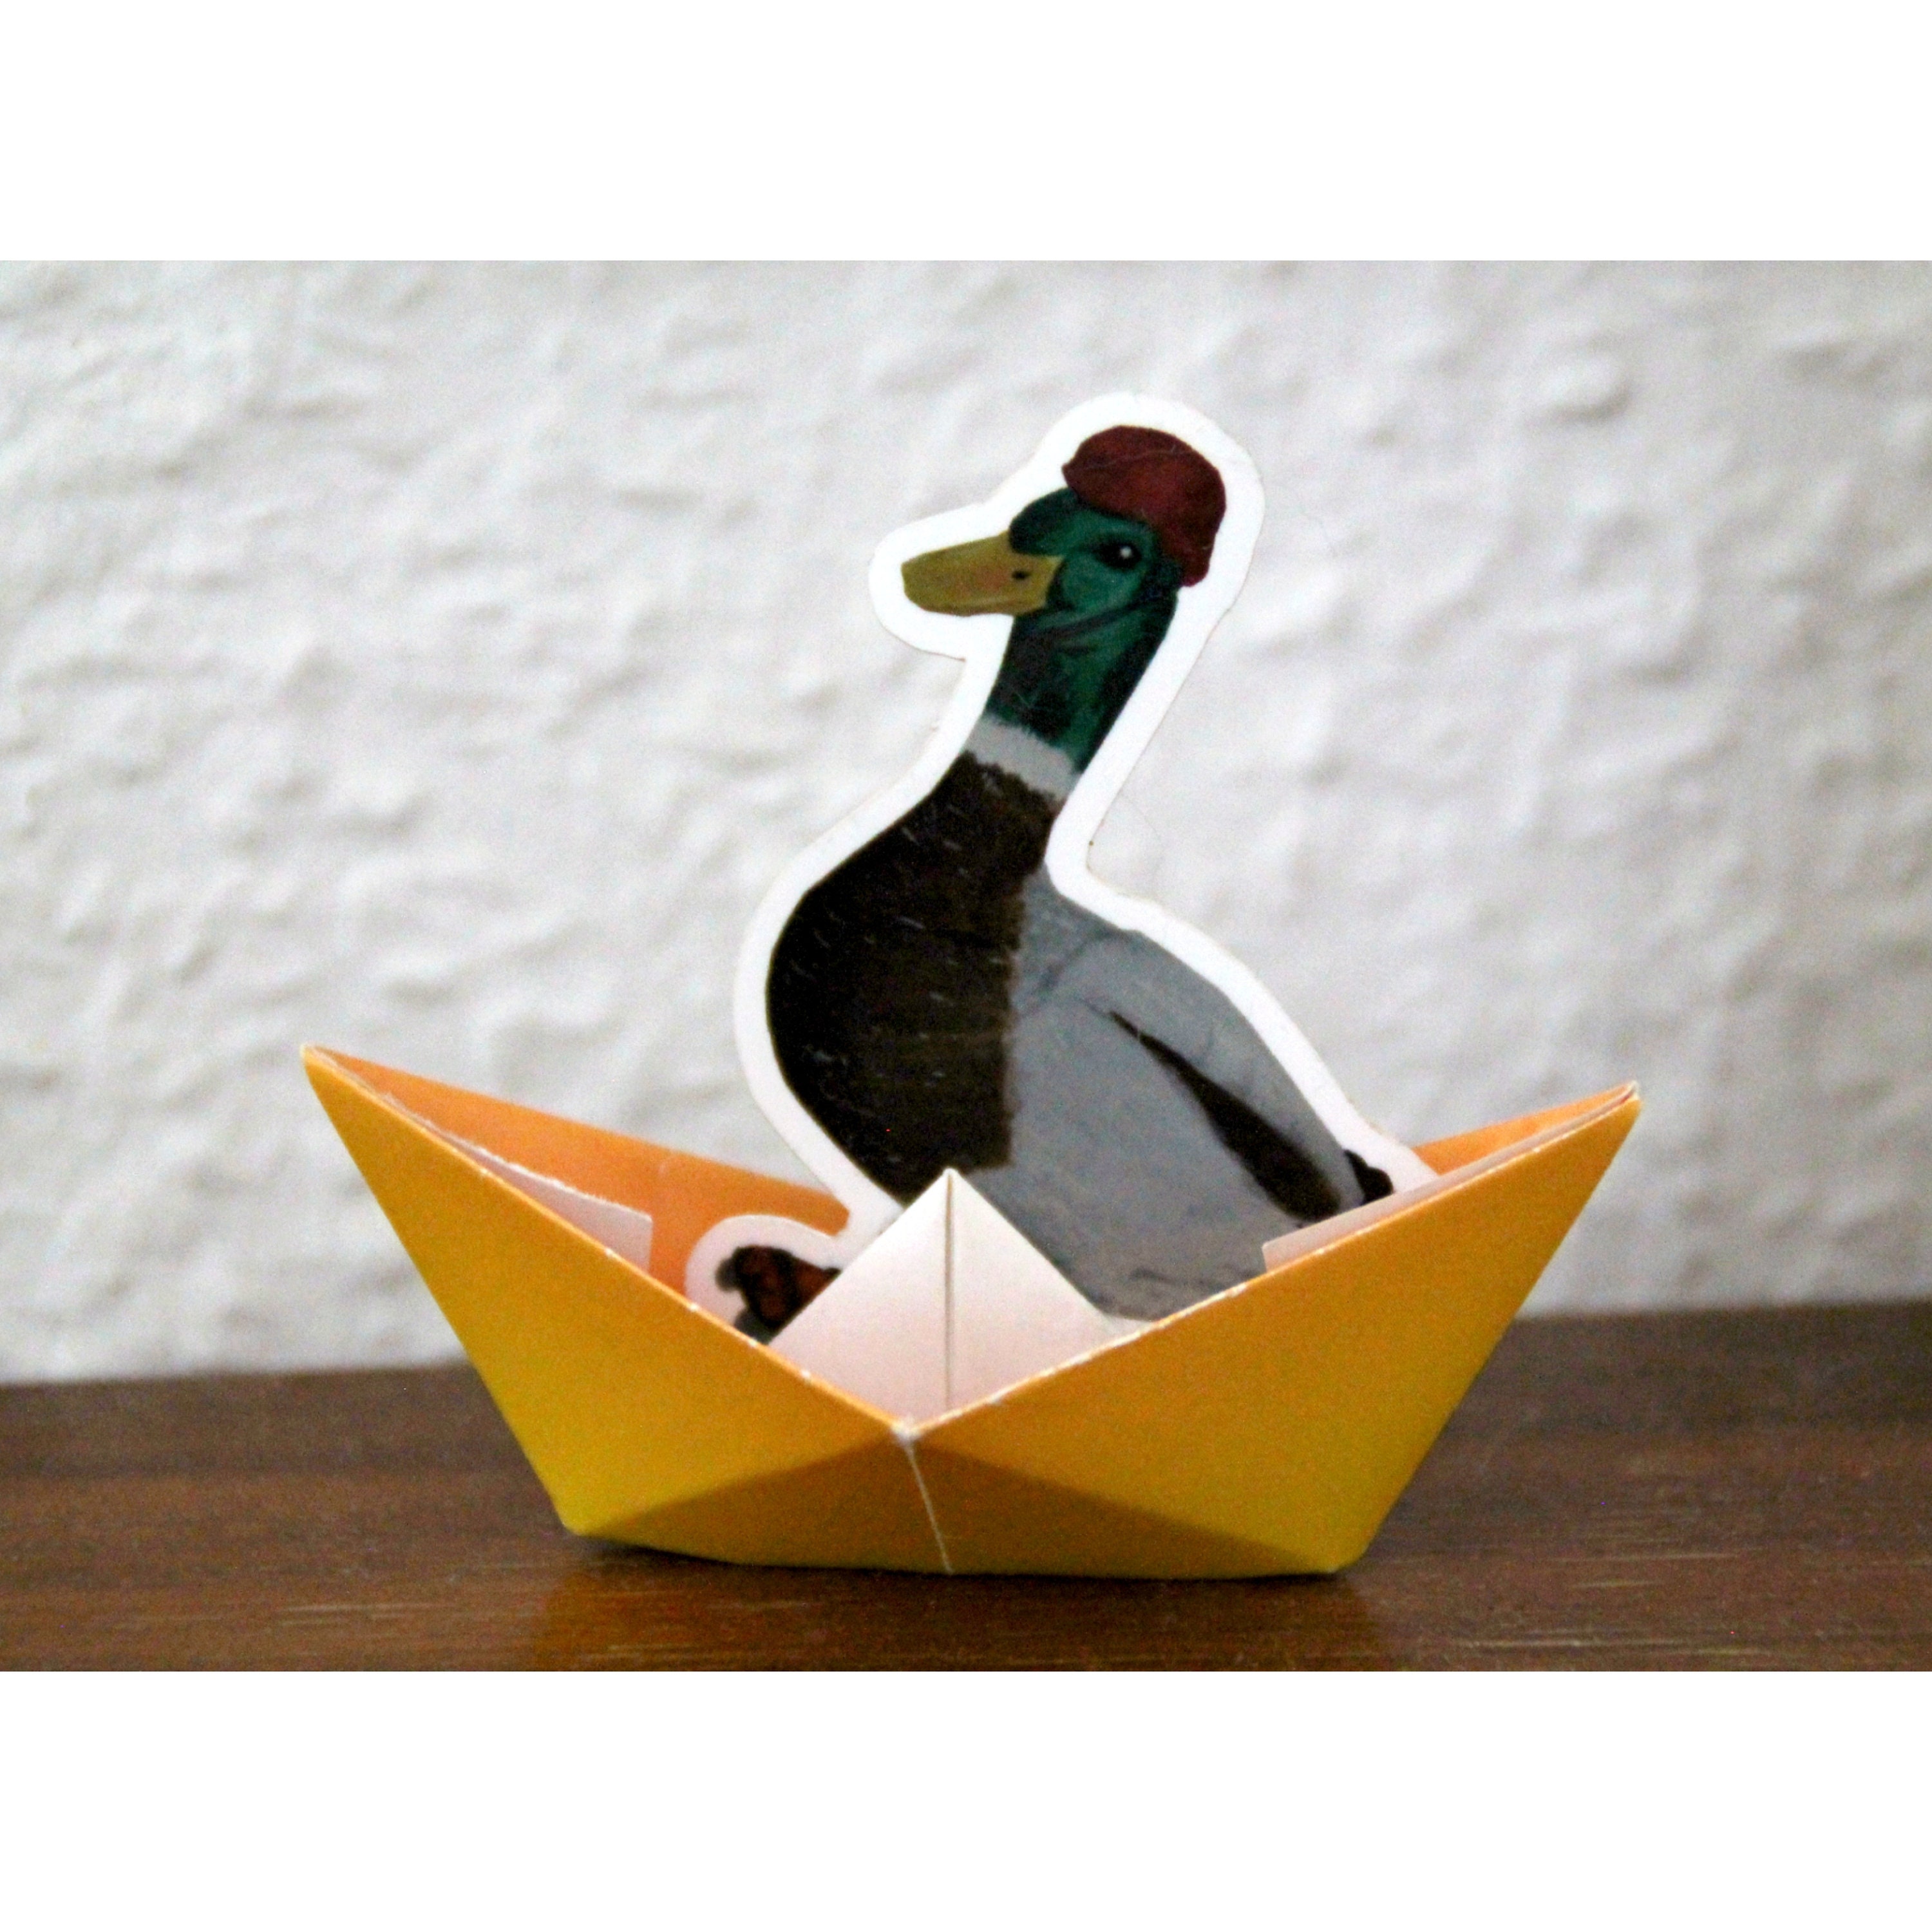 LATRAT 2 Stück Gummi Ente Auto Ornamente, Gelb Ente mit Propeller Helm,  Fahrradglocke Dekorationen Ente, Dekorationen mit Propellerhelm für  Erwachsene Kinder : : Spielzeug